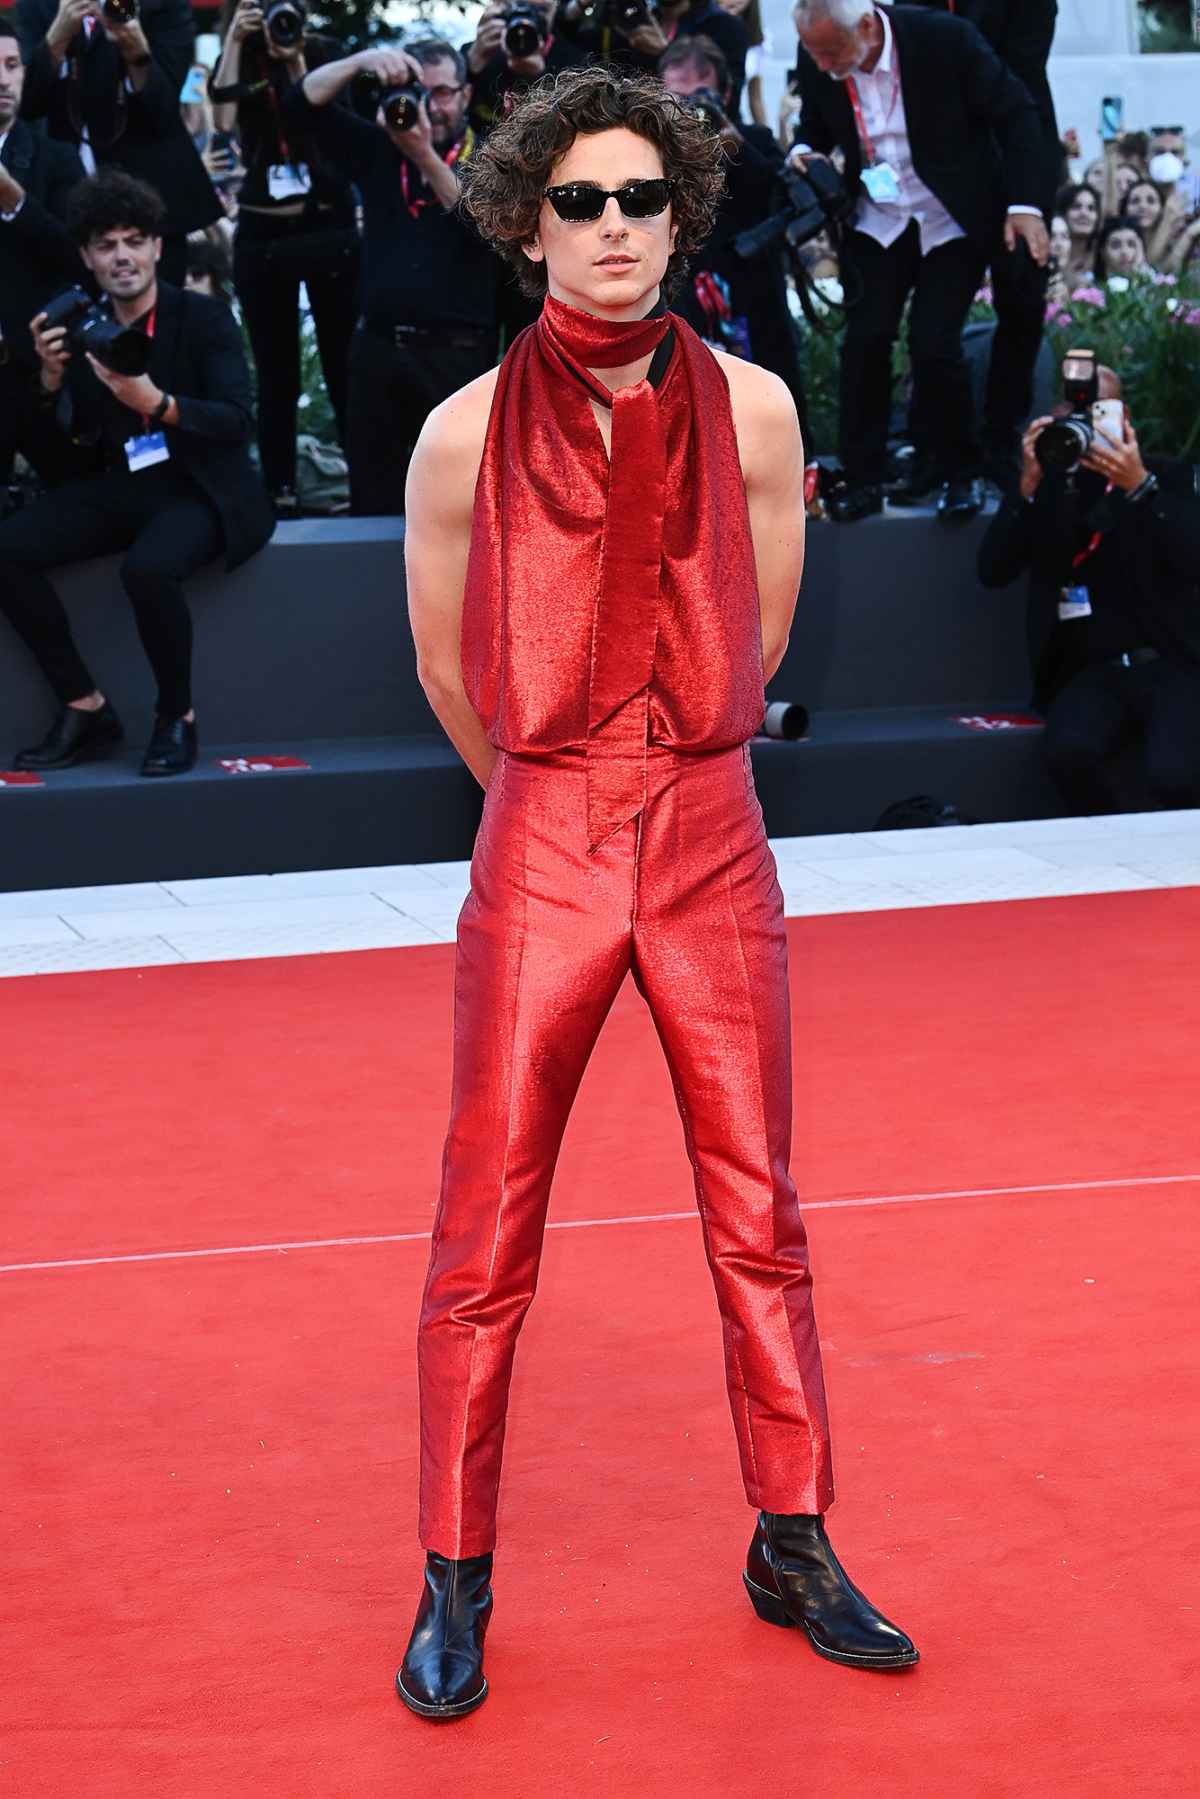 Timothee Chalamet's Best Red Carpet Looks